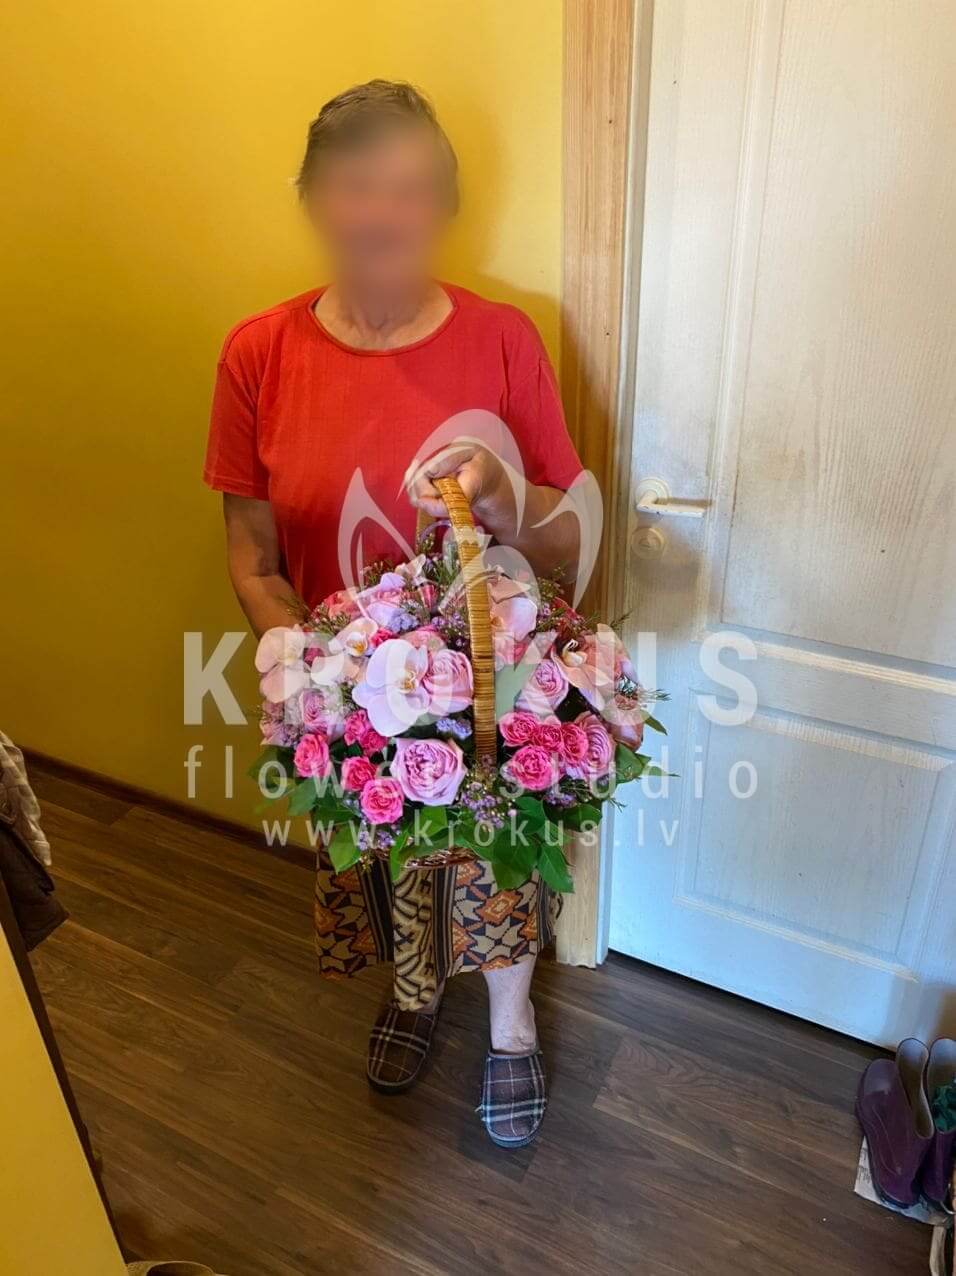 Deliver flowers to Latvia (shrub rosespink rosesorchidsstaticewaxflowersalal)